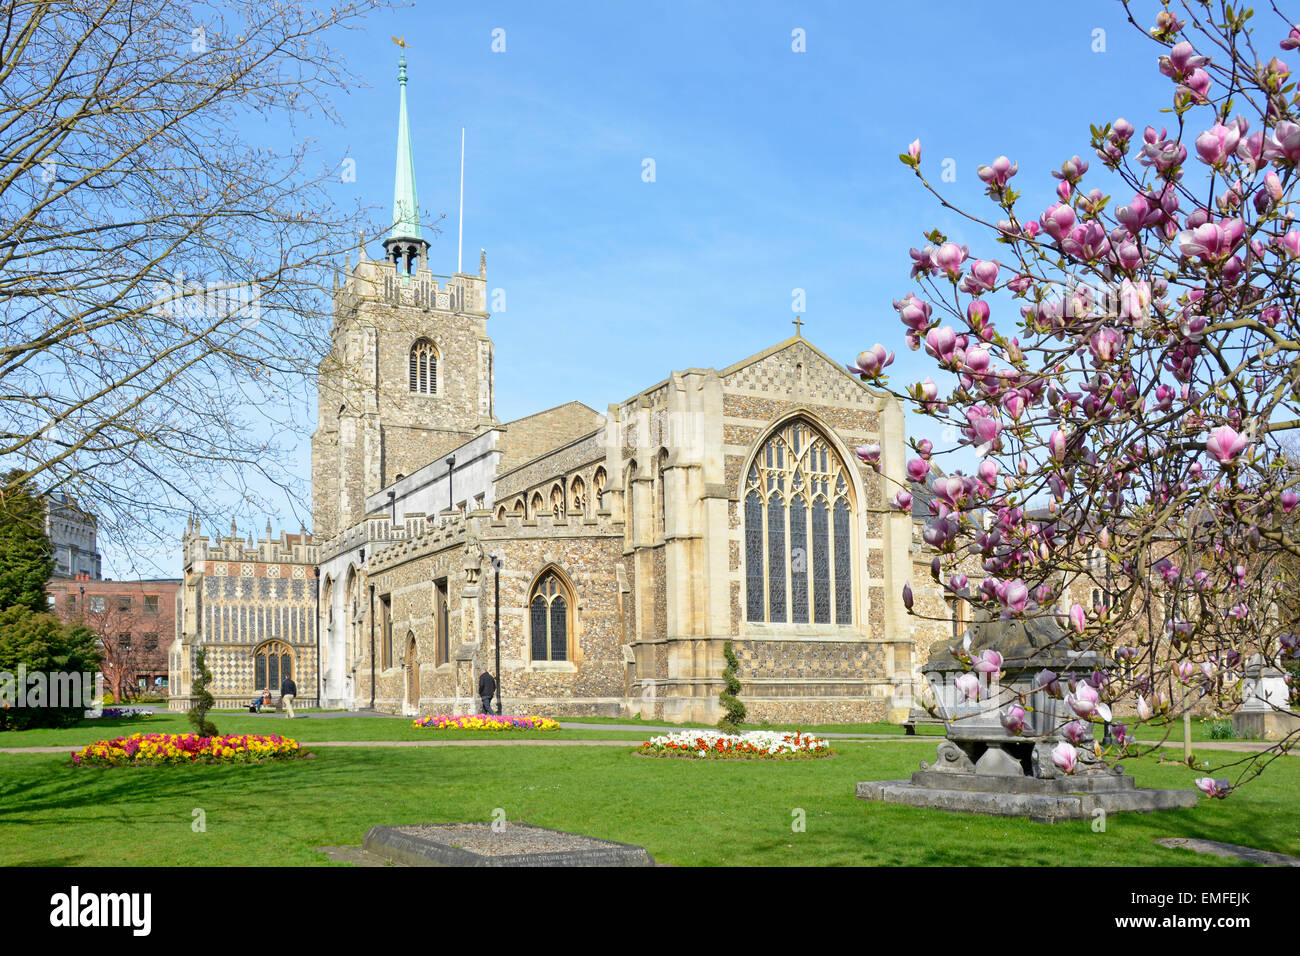 City of Chelmsford Anglikanischen Kathedrale Kirche Turm & grünen Kupfer Kirchturm Stein Sarkophag in Kirchhof hinter Magnolia Essex England Großbritannien Stockfoto